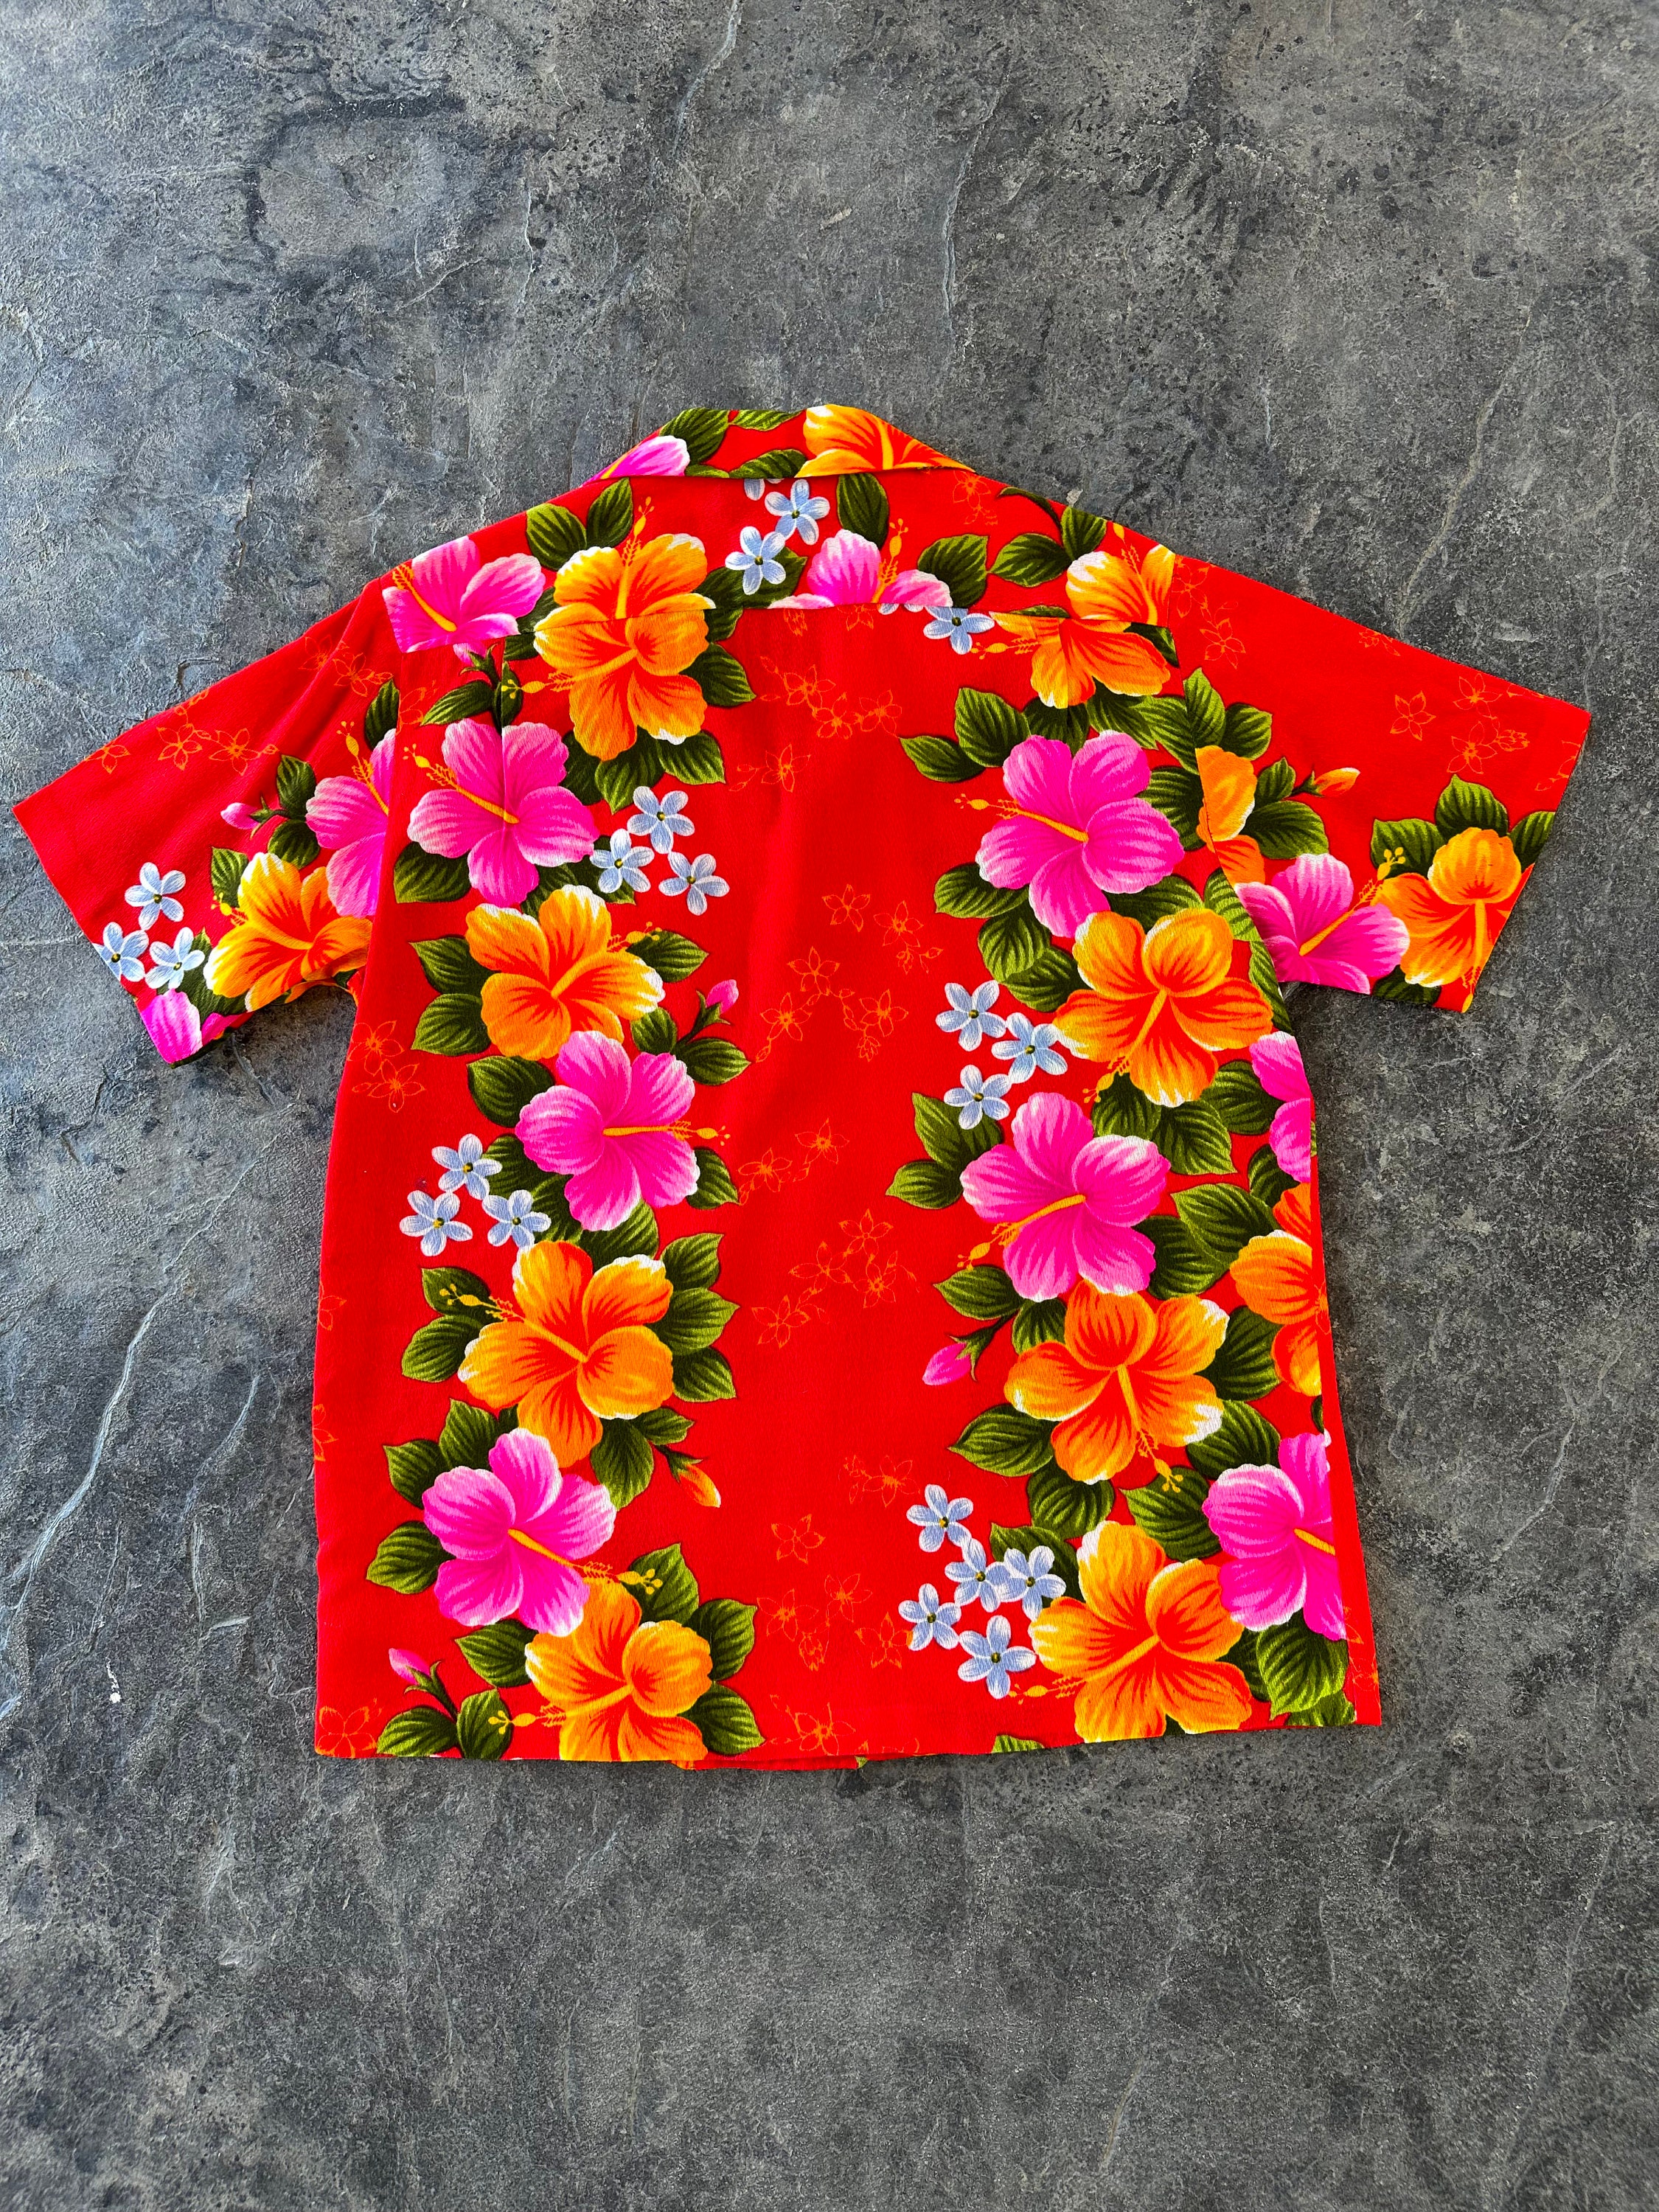 Discover Camisa Hawaiana Roja Vintage Unisex